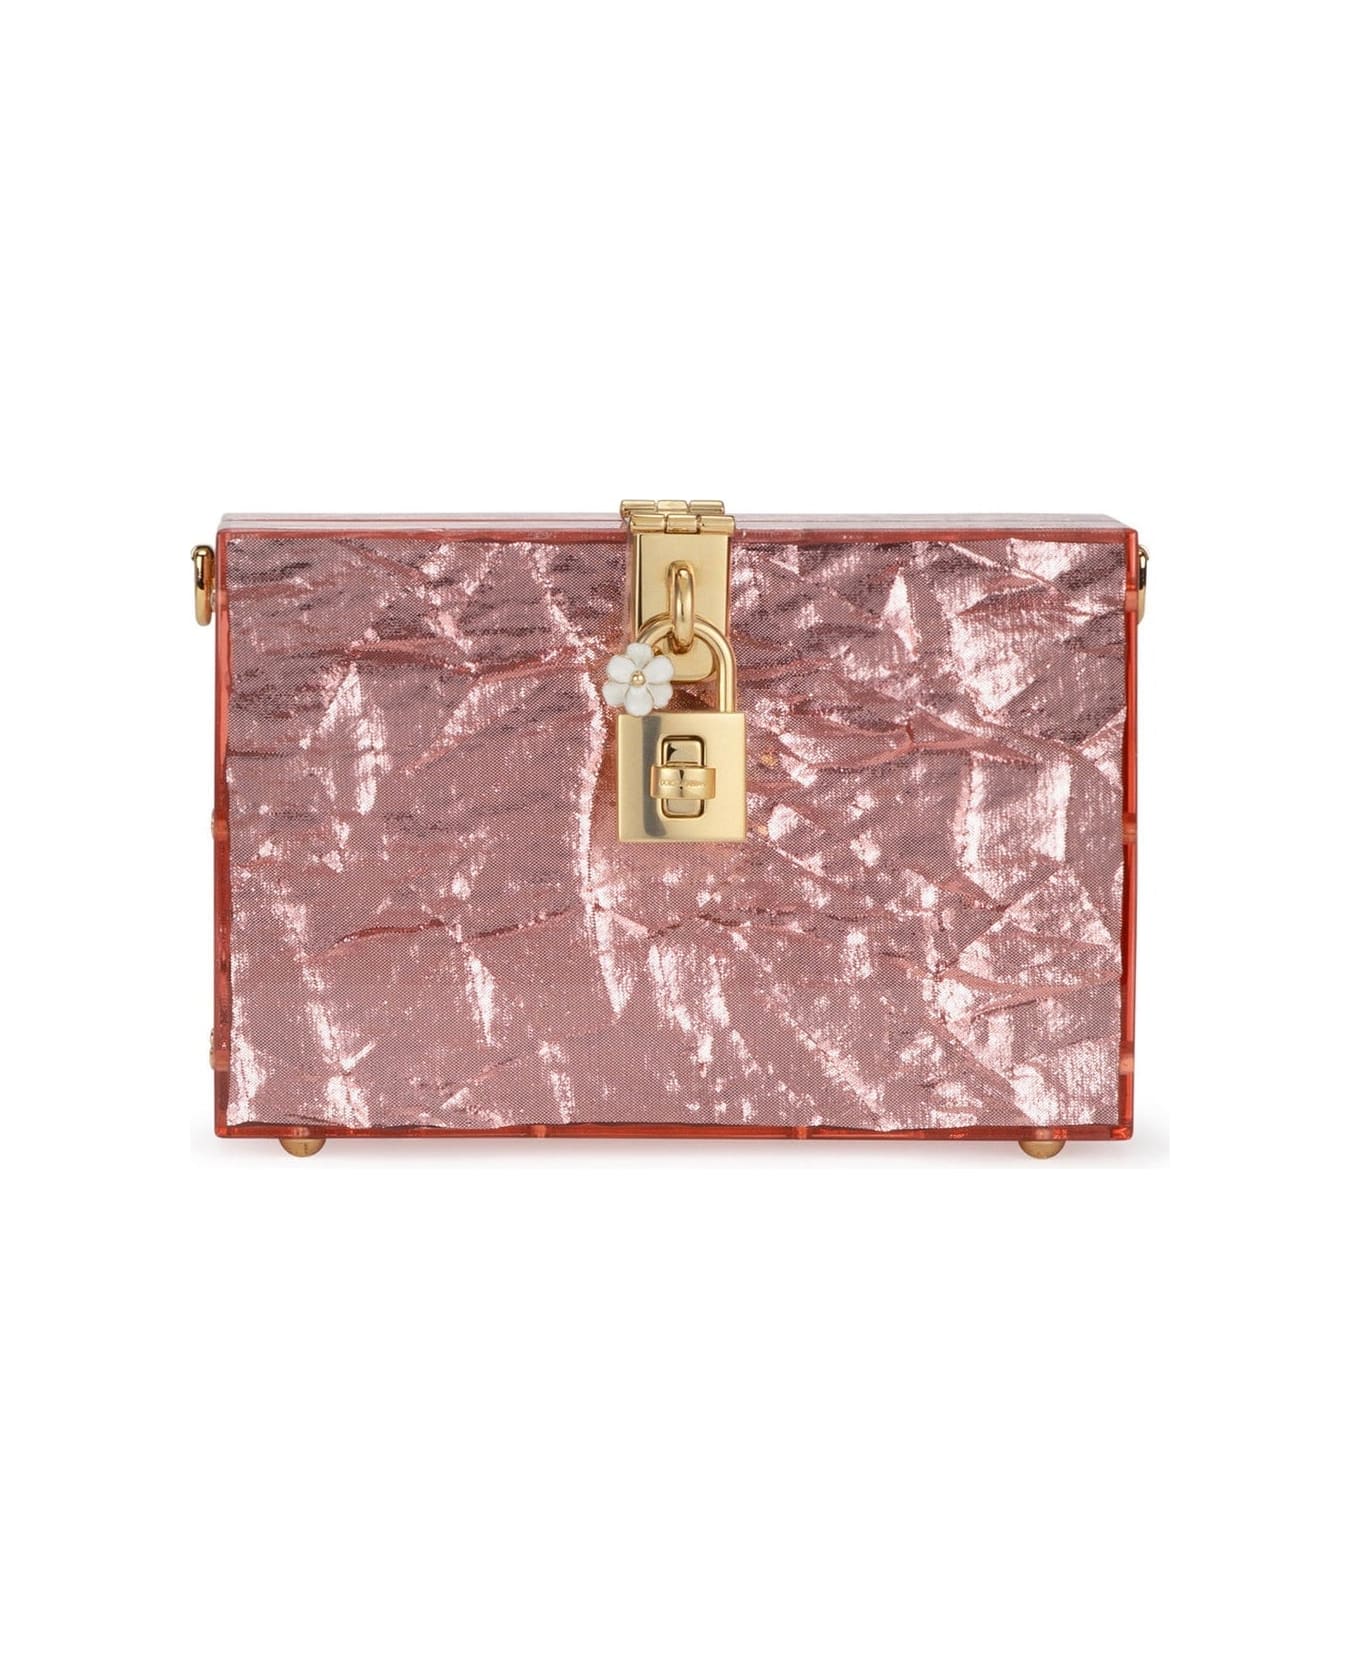 Dolce & Gabbana Metallic Clutch - Pink クラッチバッグ